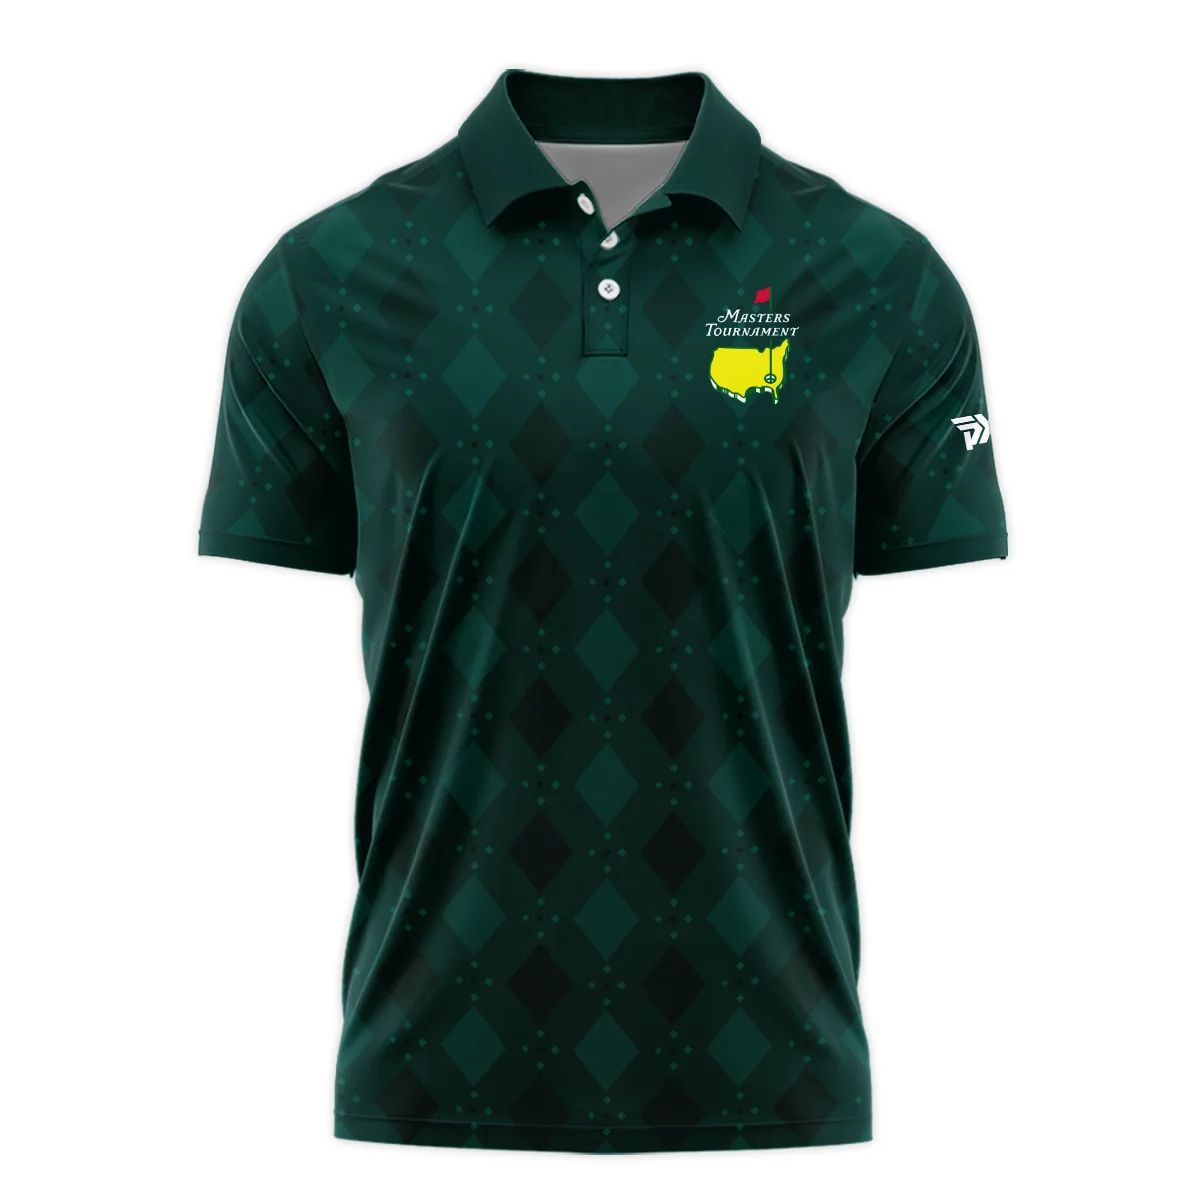 Dark Green Argyle Plaid Pattern Golf Masters Tournament Unisex Sweatshirt Style Classic Sweatshirt